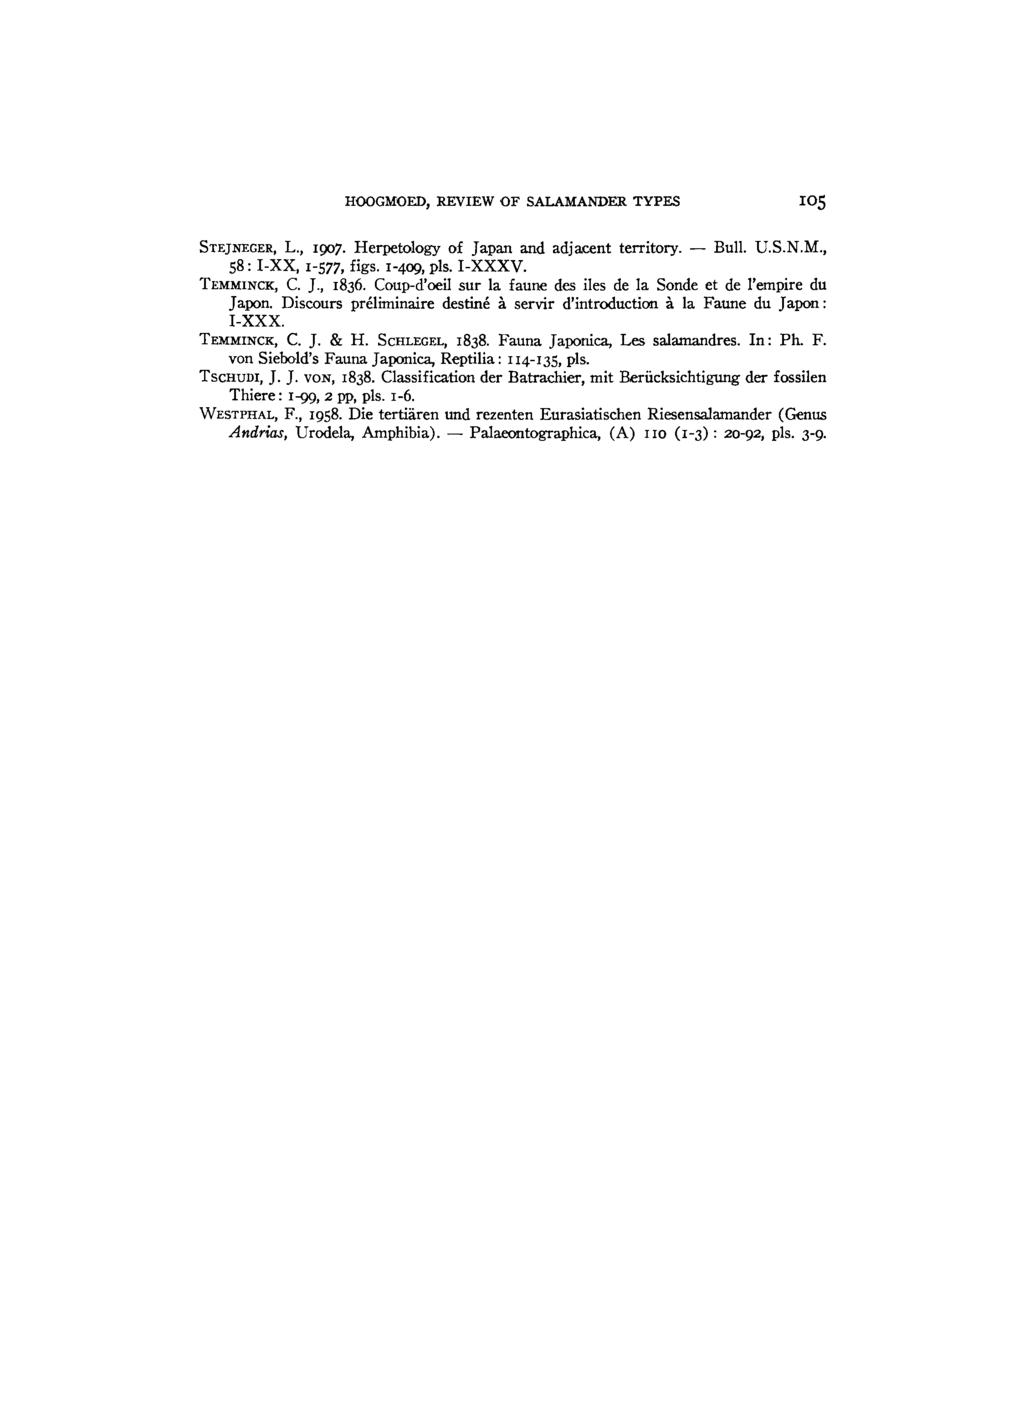 HOOGMOED, REVIEW OF SALAMANDER TYPES STEJNEGER, L., 1907. Herpetology of Japan and adjacent territory. Bull. U.S.N.M., 58 : I-XX, 1-577, figs. 1-409, Pb. I-XXXV. TEMMINCK, C. J., 1836.